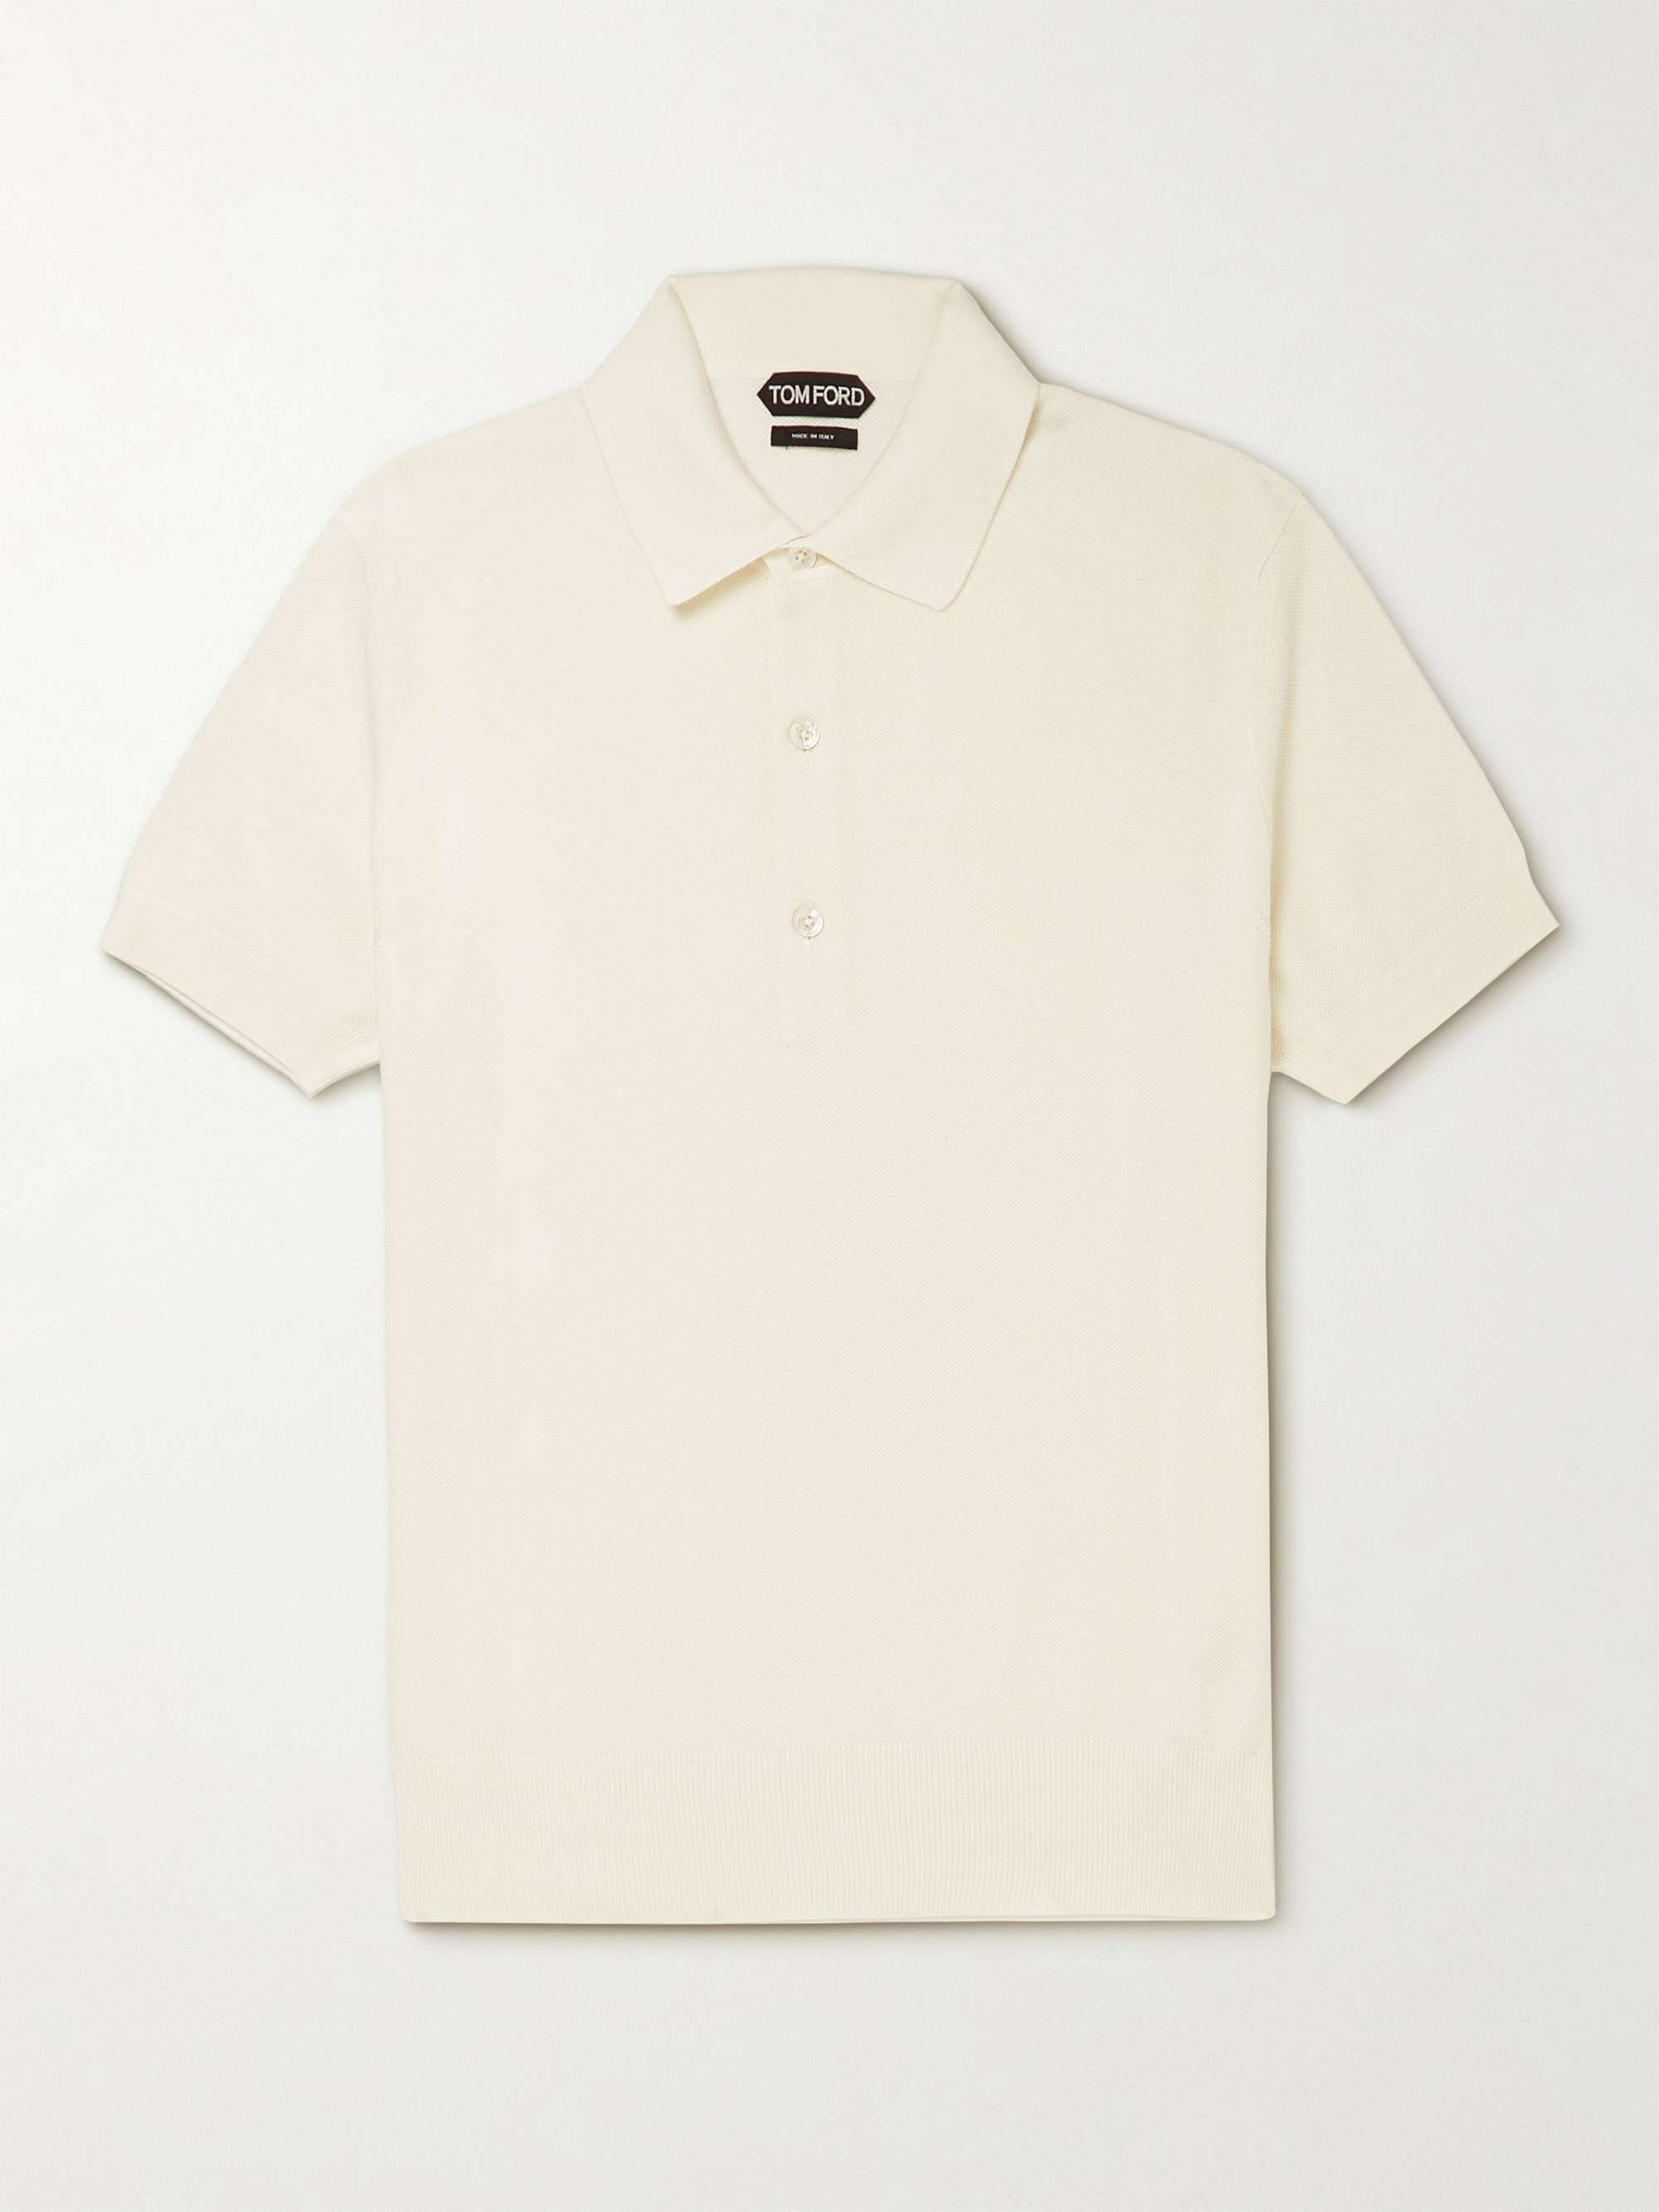 TOM FORD Cotton and Silk-Blend Piqué Polo Shirt